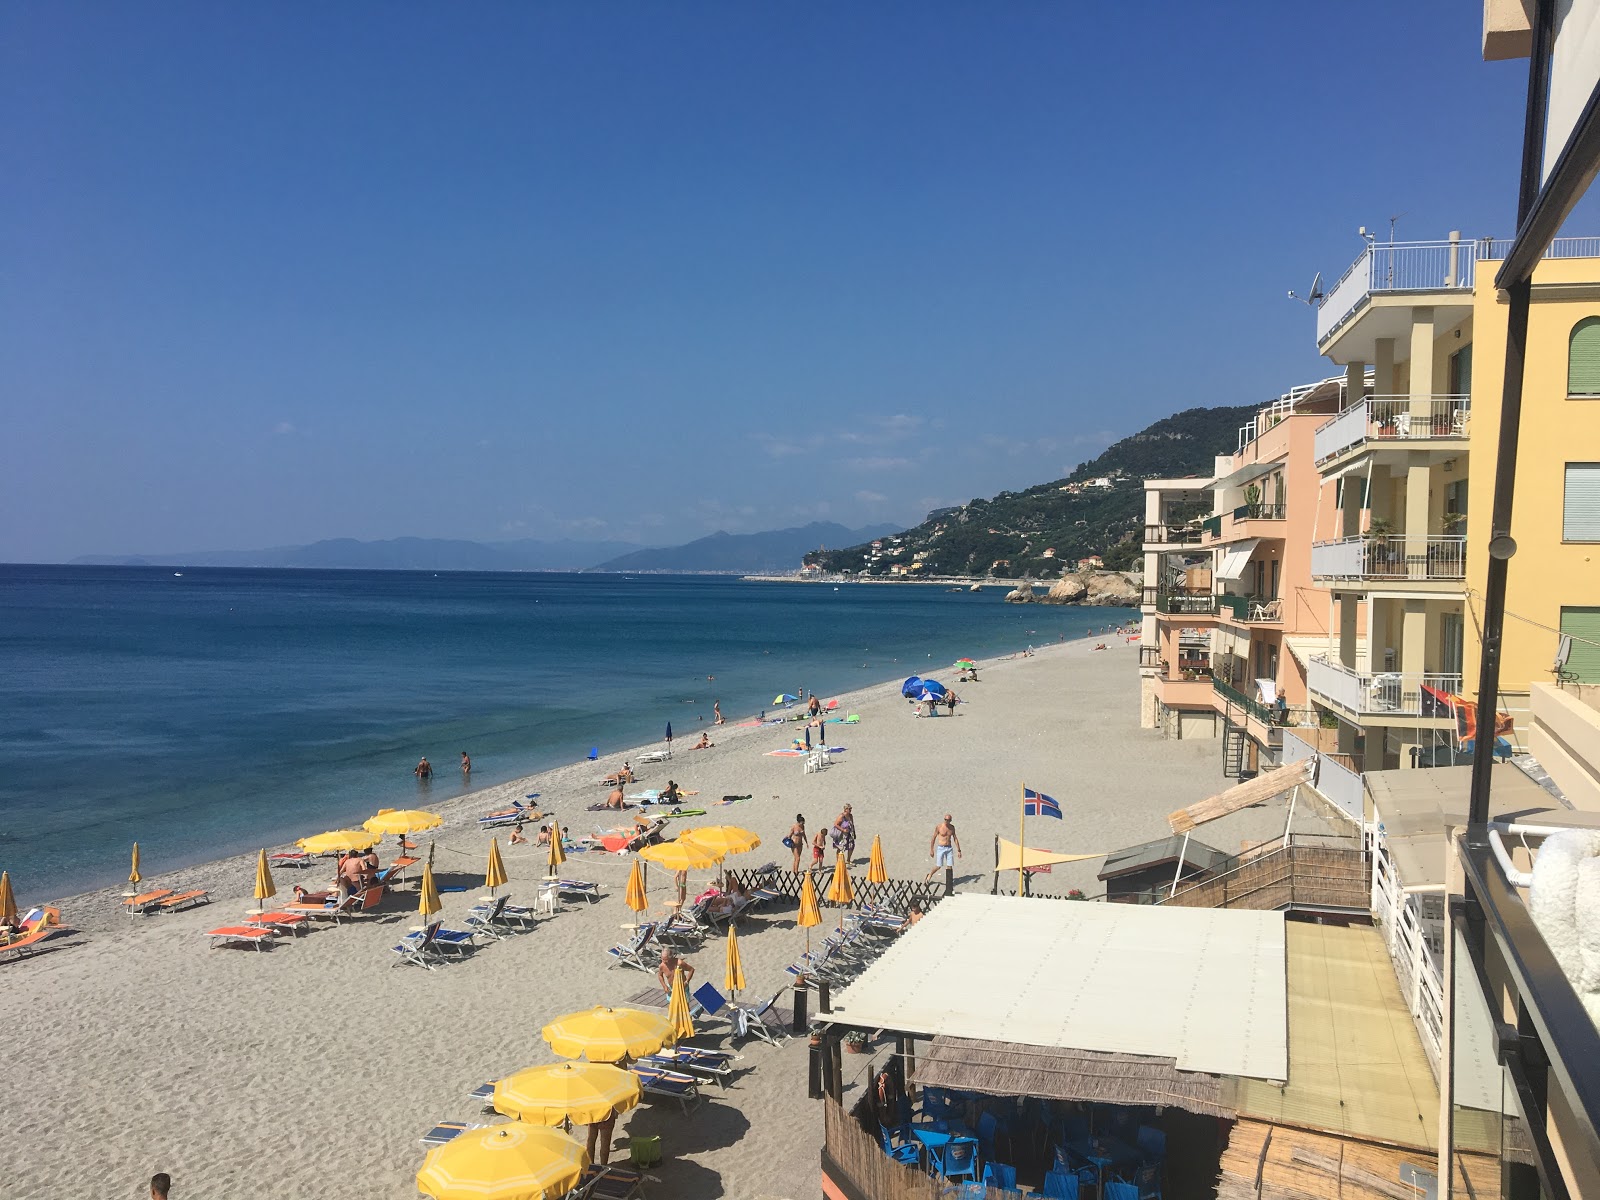 Foto de Spiaggia libera di Varigotti y su hermoso paisaje